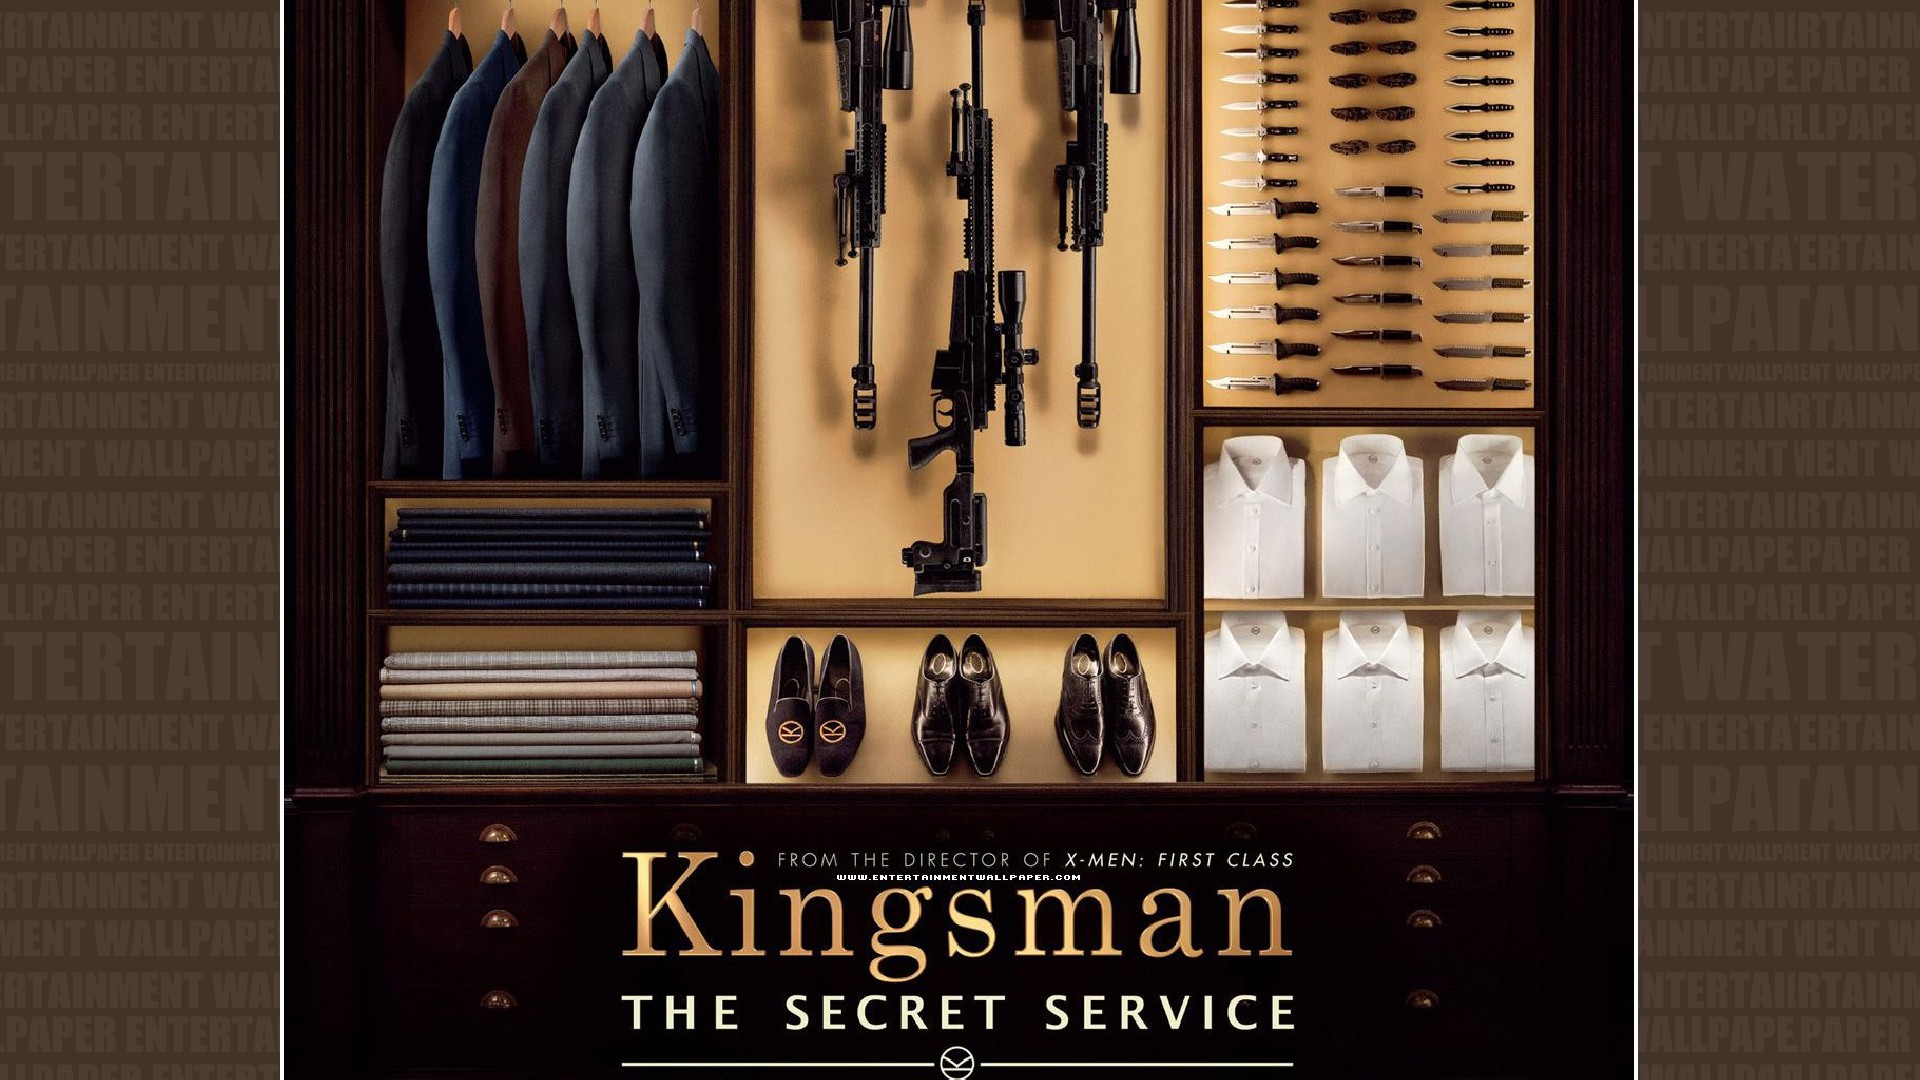 Kingsman The Secret Service Wallpaper   MixHD wallpapers